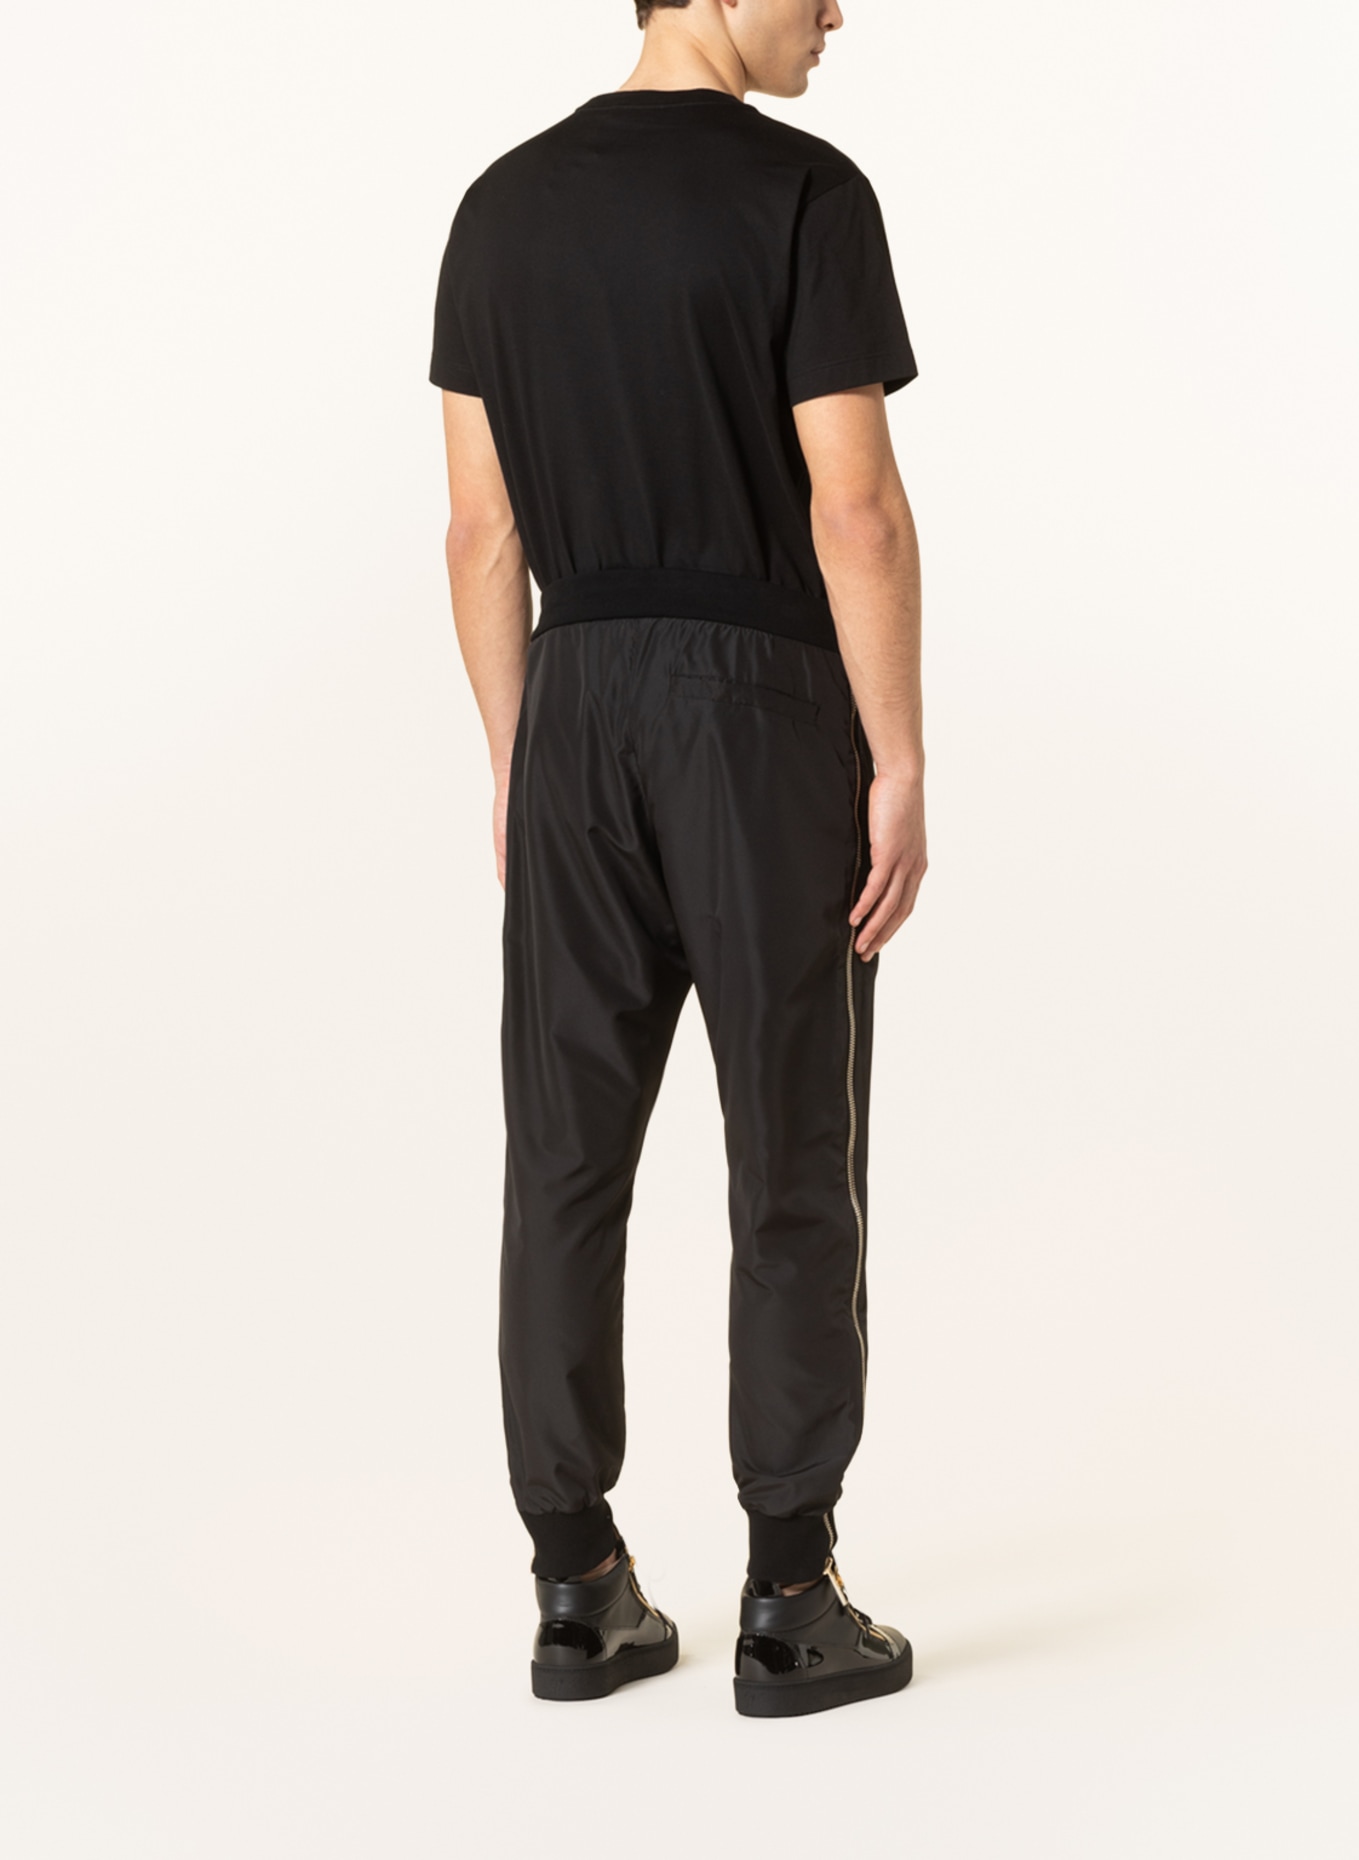 GIUSEPPE ZANOTTI DESIGN Pants in jogger style, Color: BLACK (Image 3)